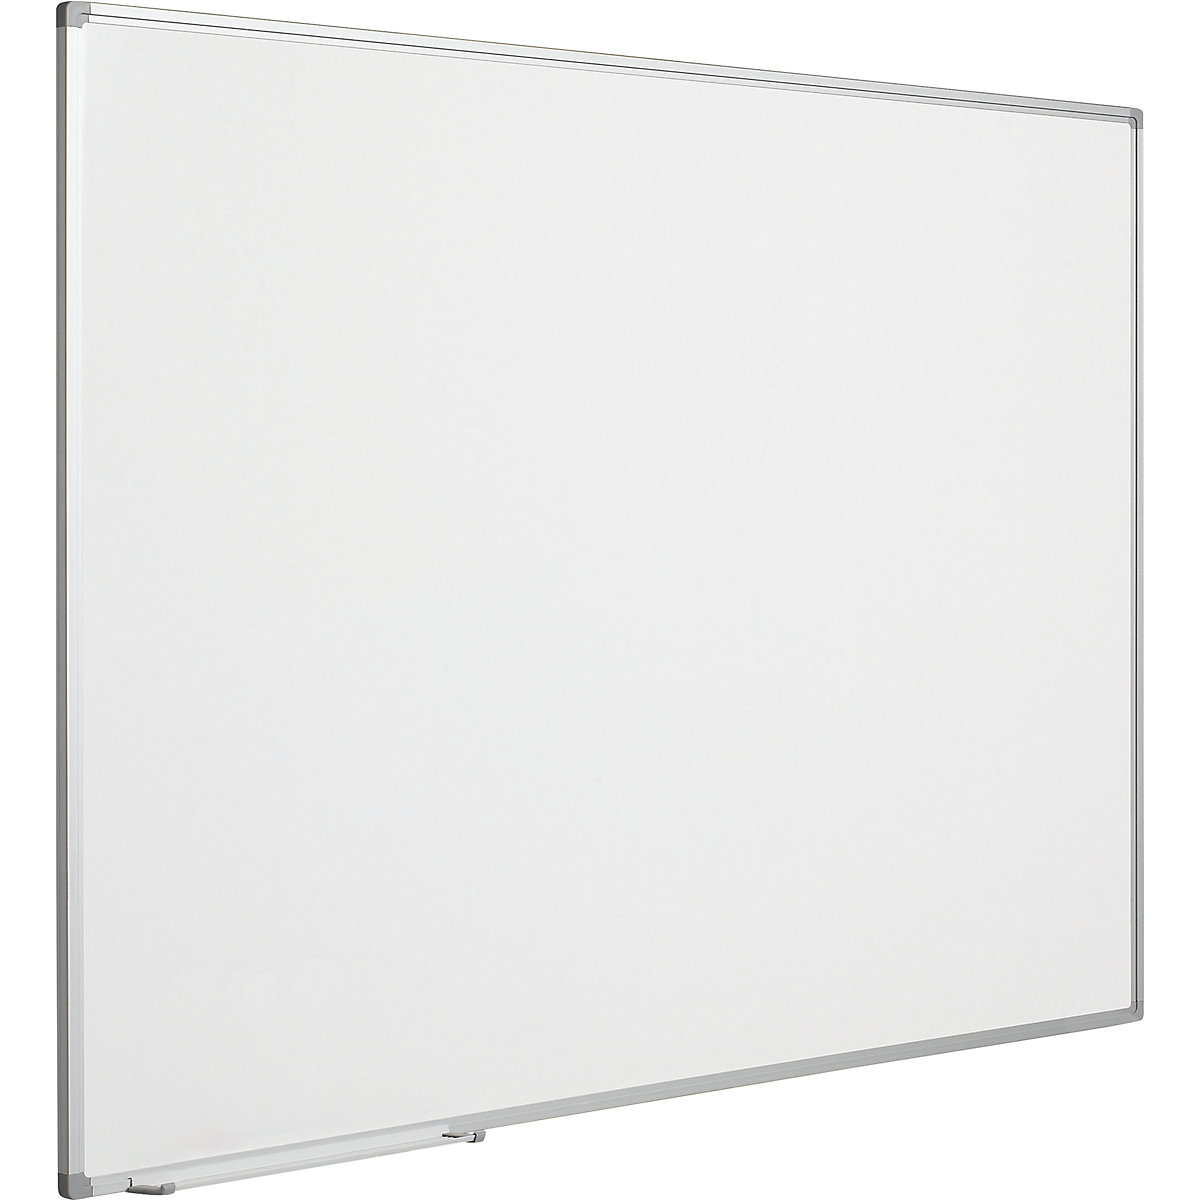 Economy whiteboard – eurokraft pro, sheet steel, painted, WxH 2400 x 1200 mm-1